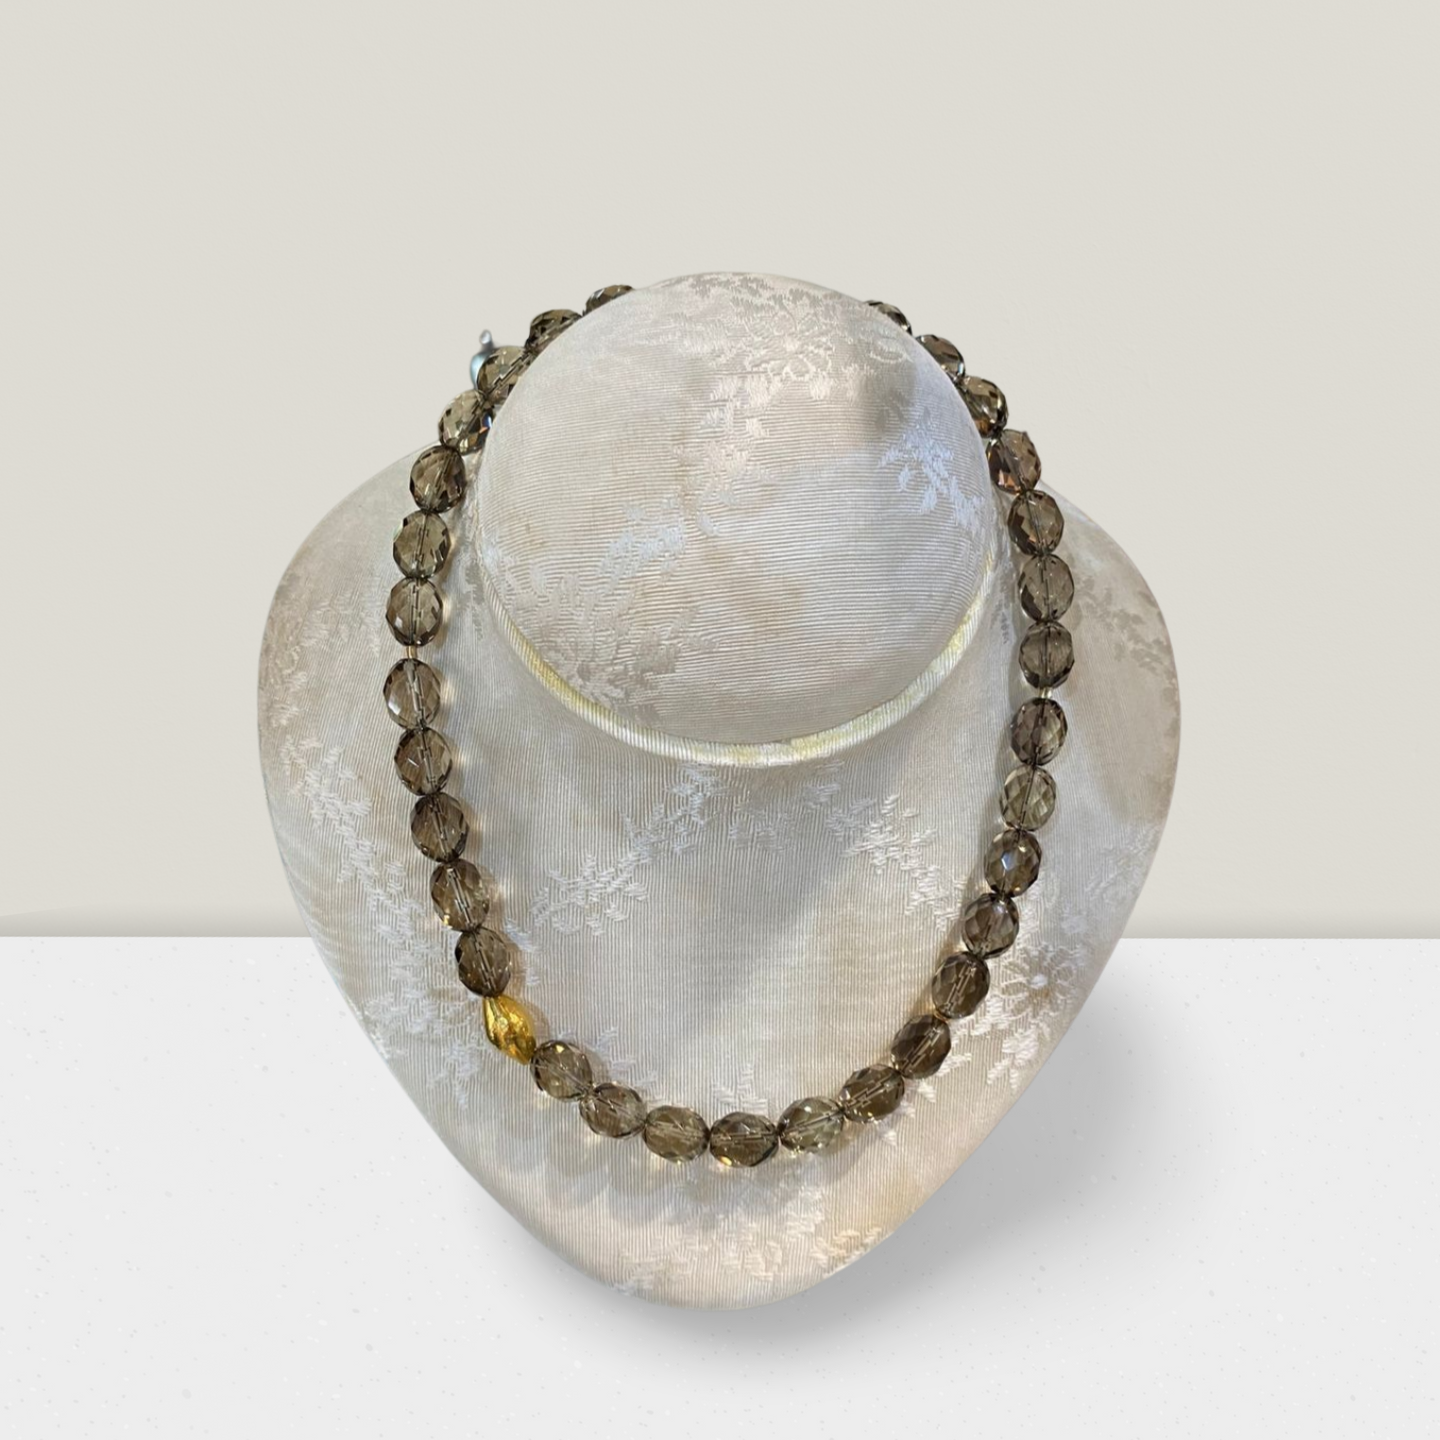 Necklace in Smoke Topaz Gemstones & gold 18k elements